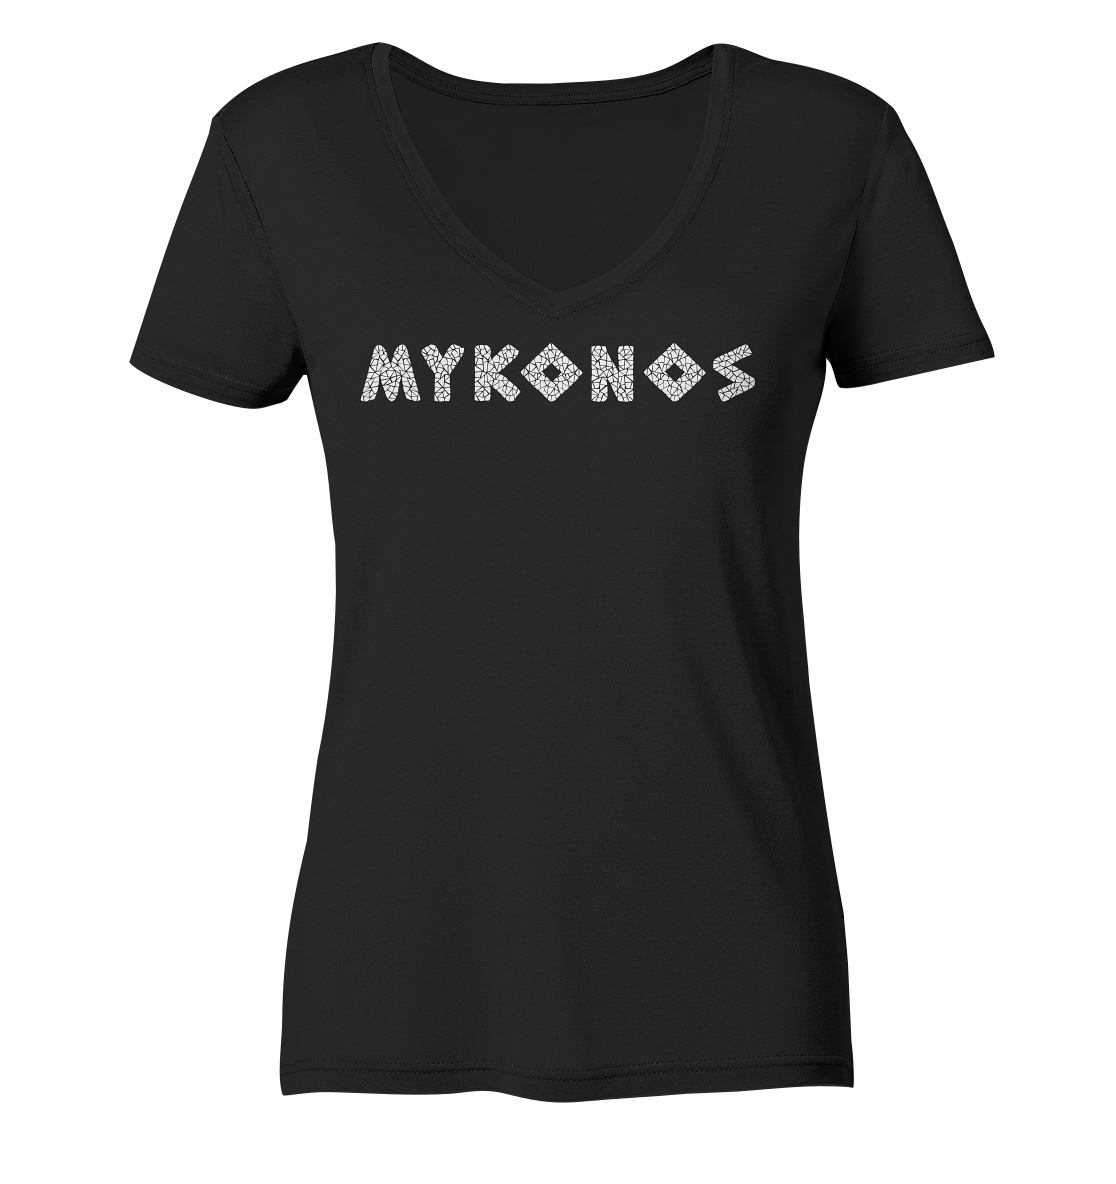 Mykonos Mosaik - Ladies Organic V-Neck Shirt